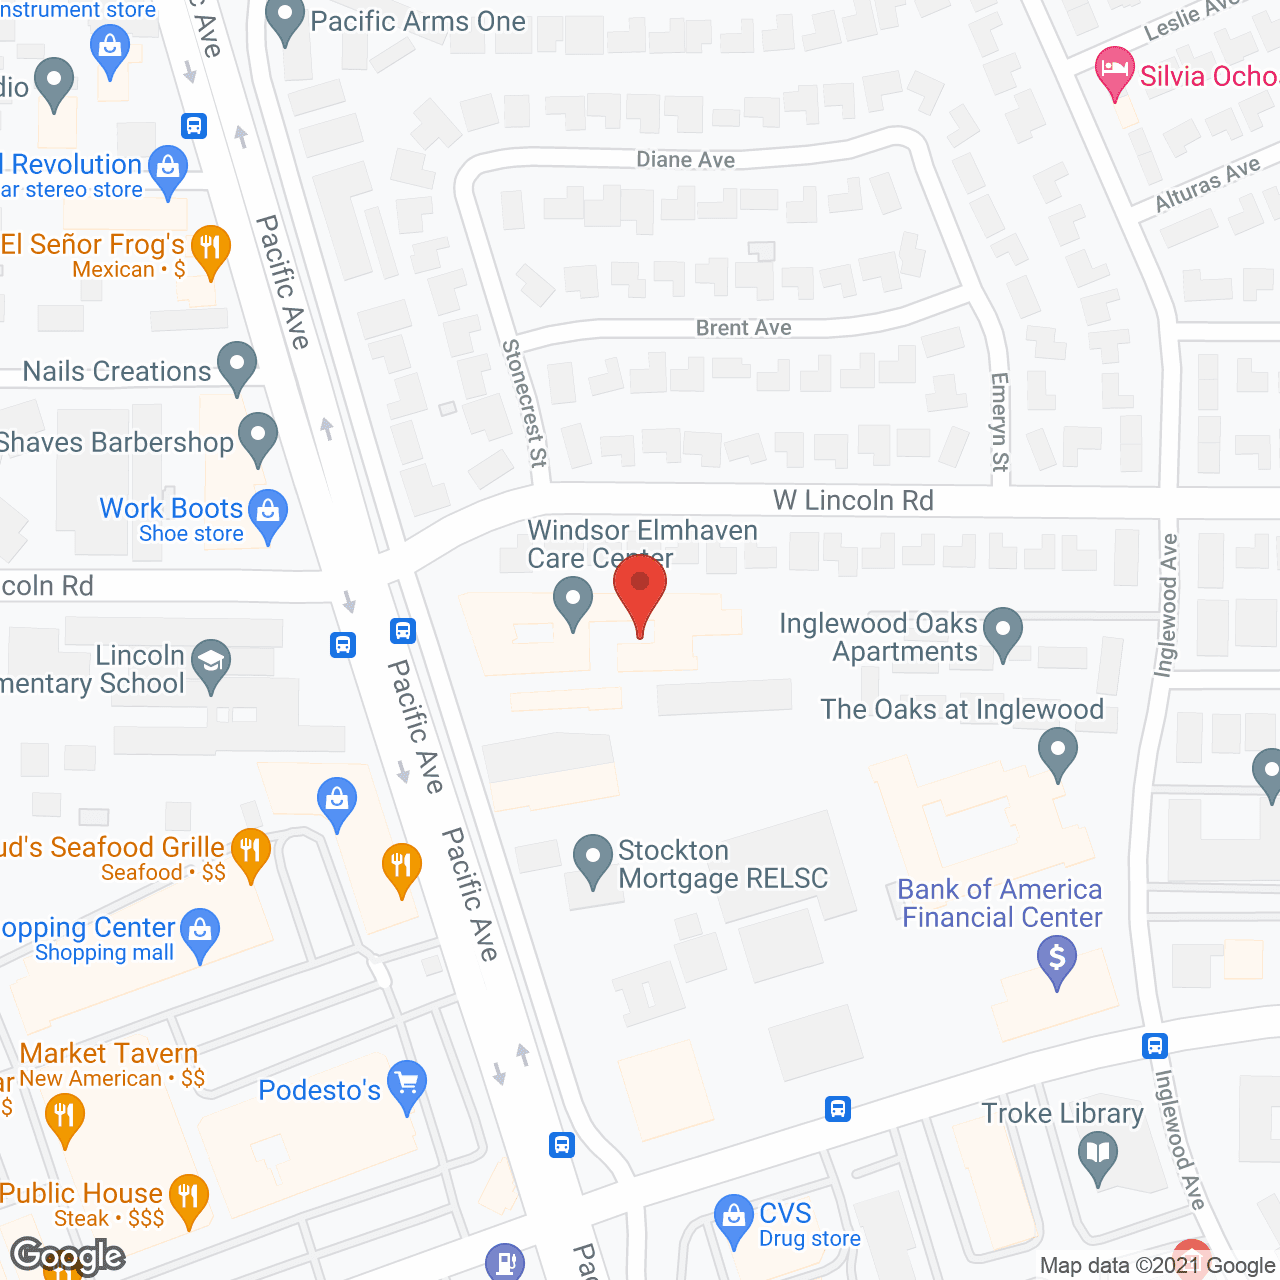 Windsor Elmhaven Care Center in google map